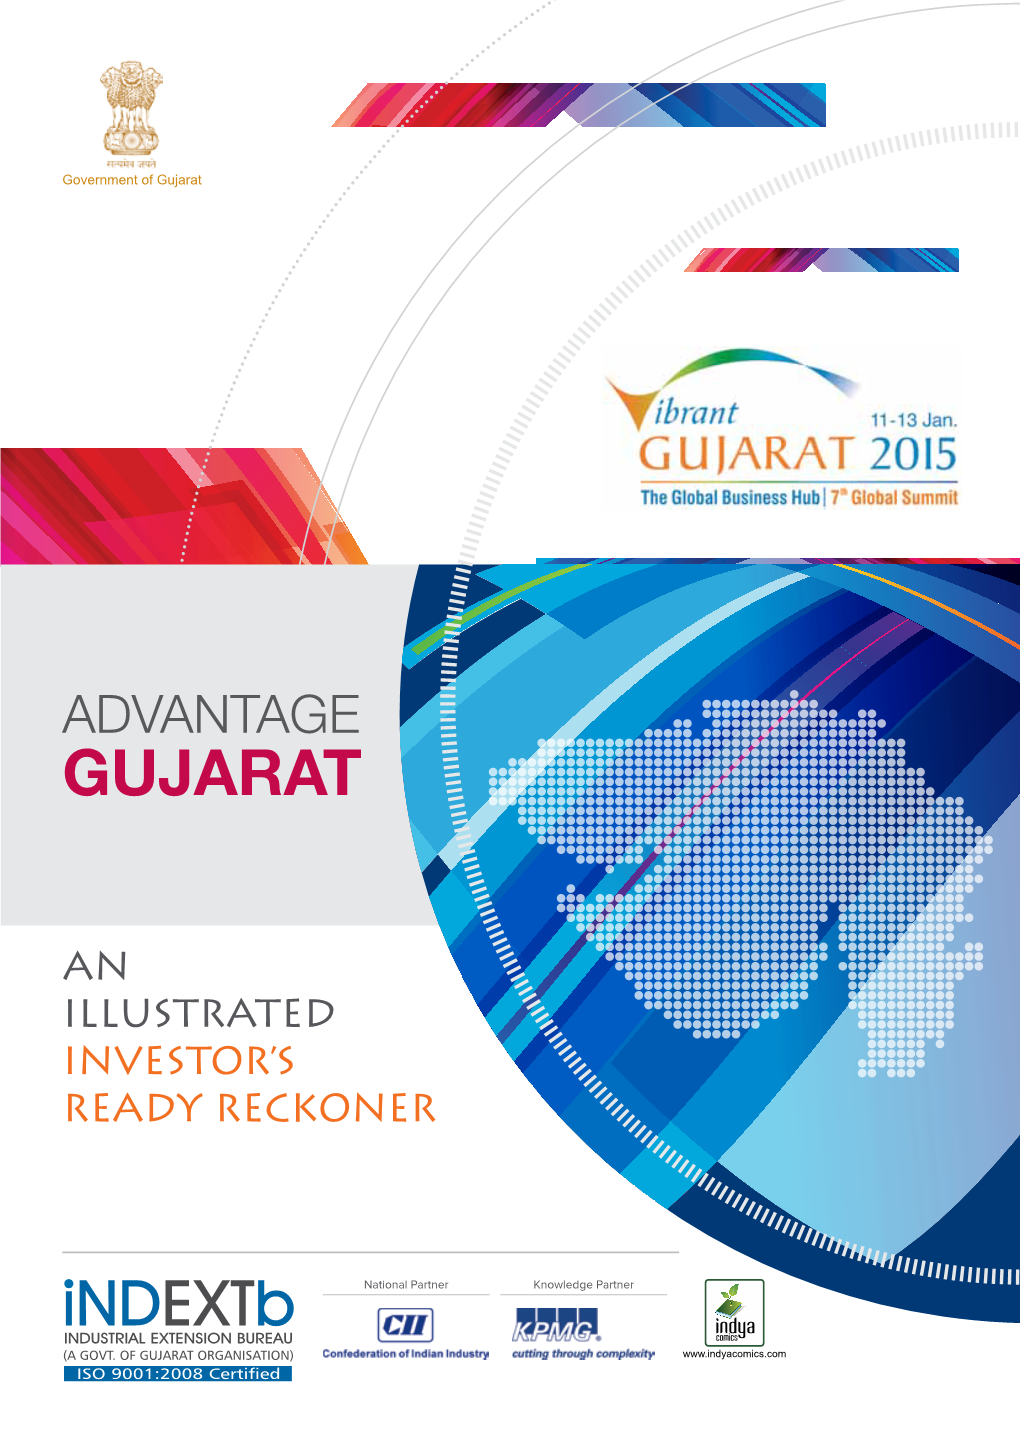 Vibrant Gujarat Global Summit in January, 2015